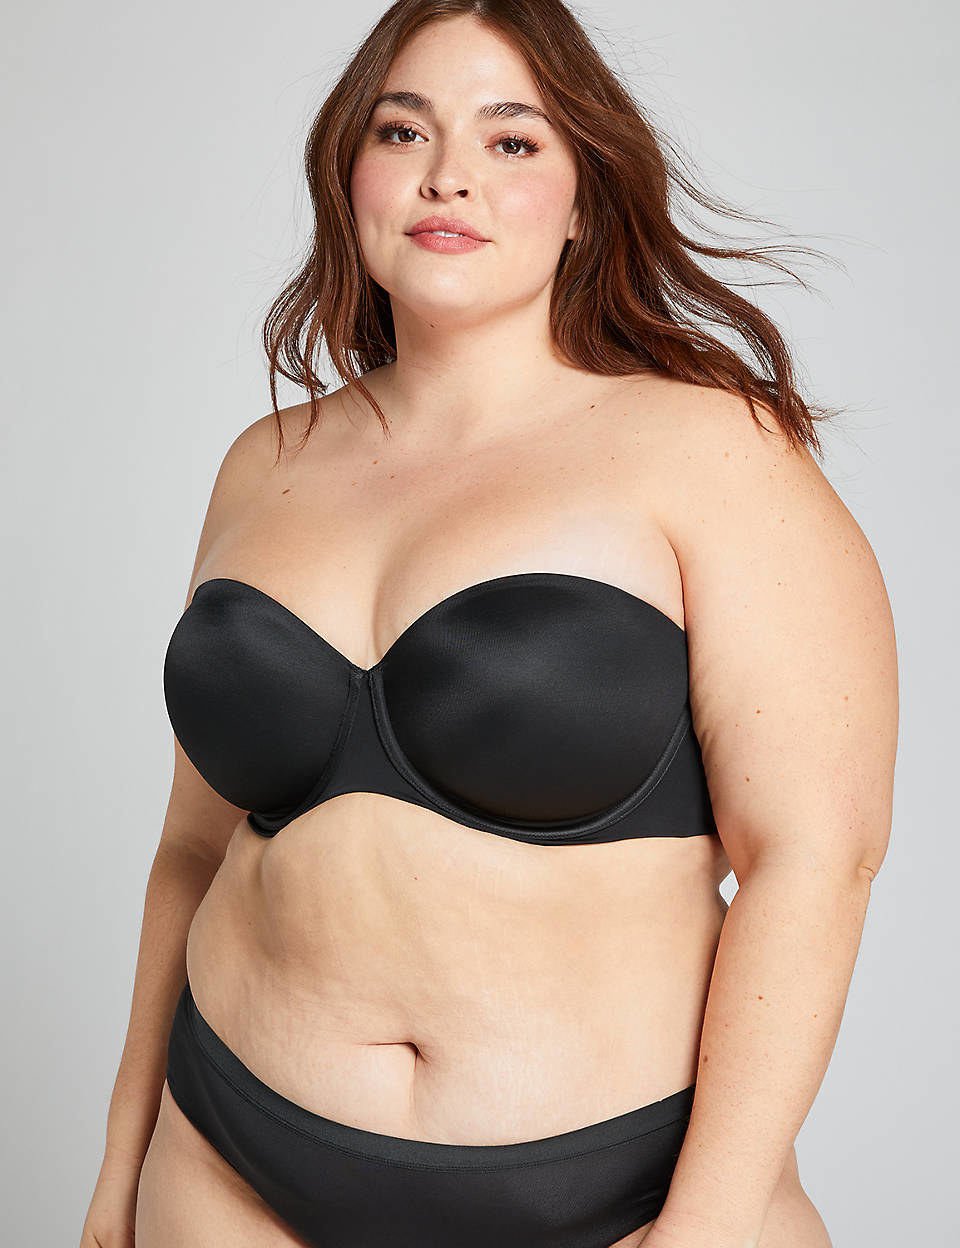 Model wearing black strapless bra and panties